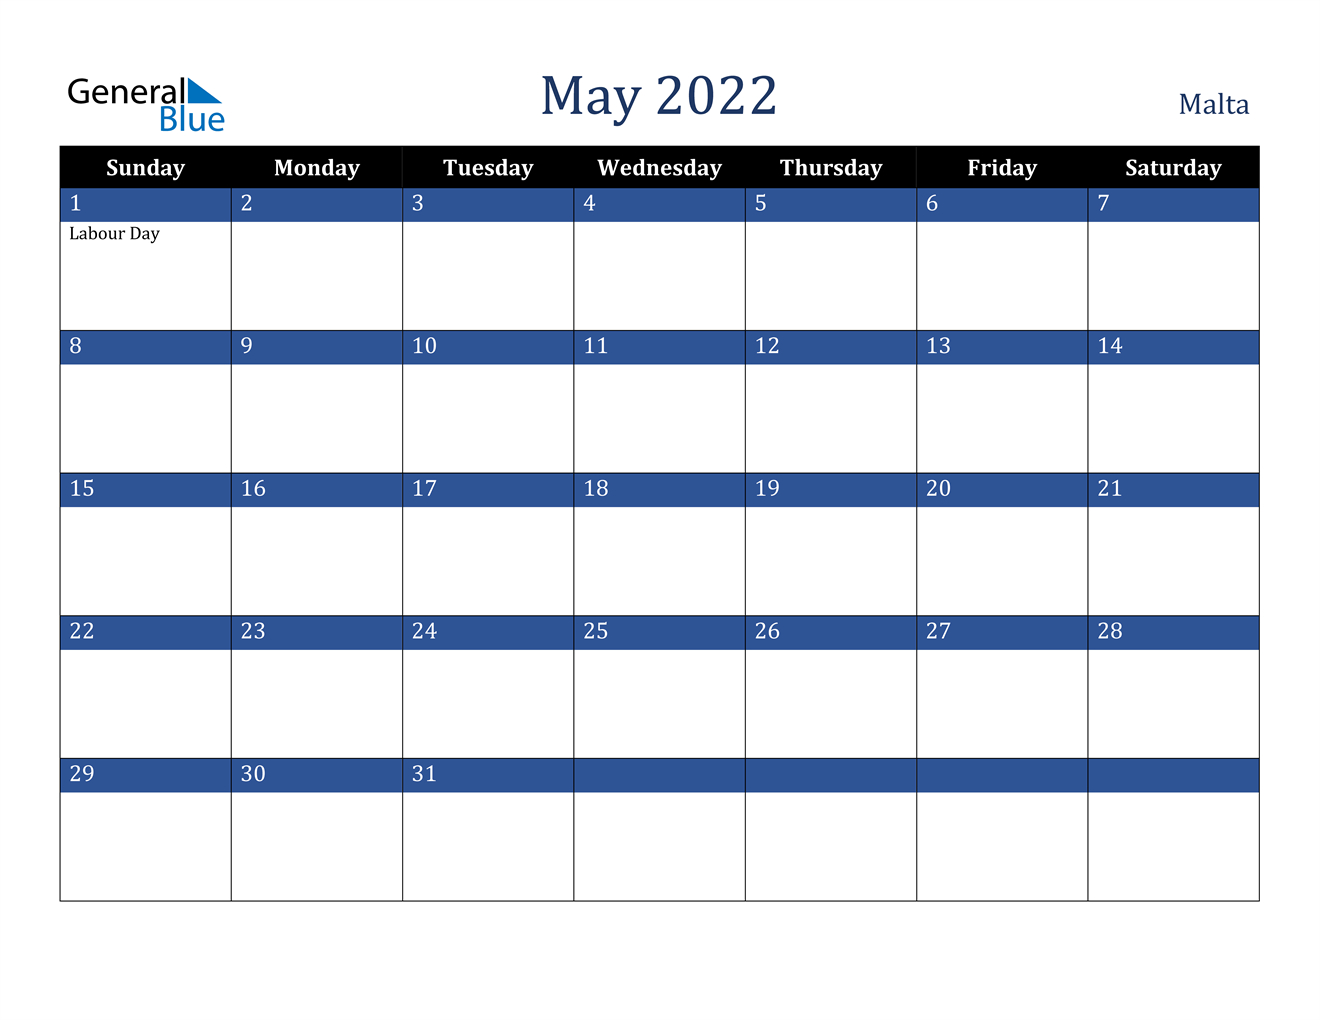 May 2022 Calendar - Malta